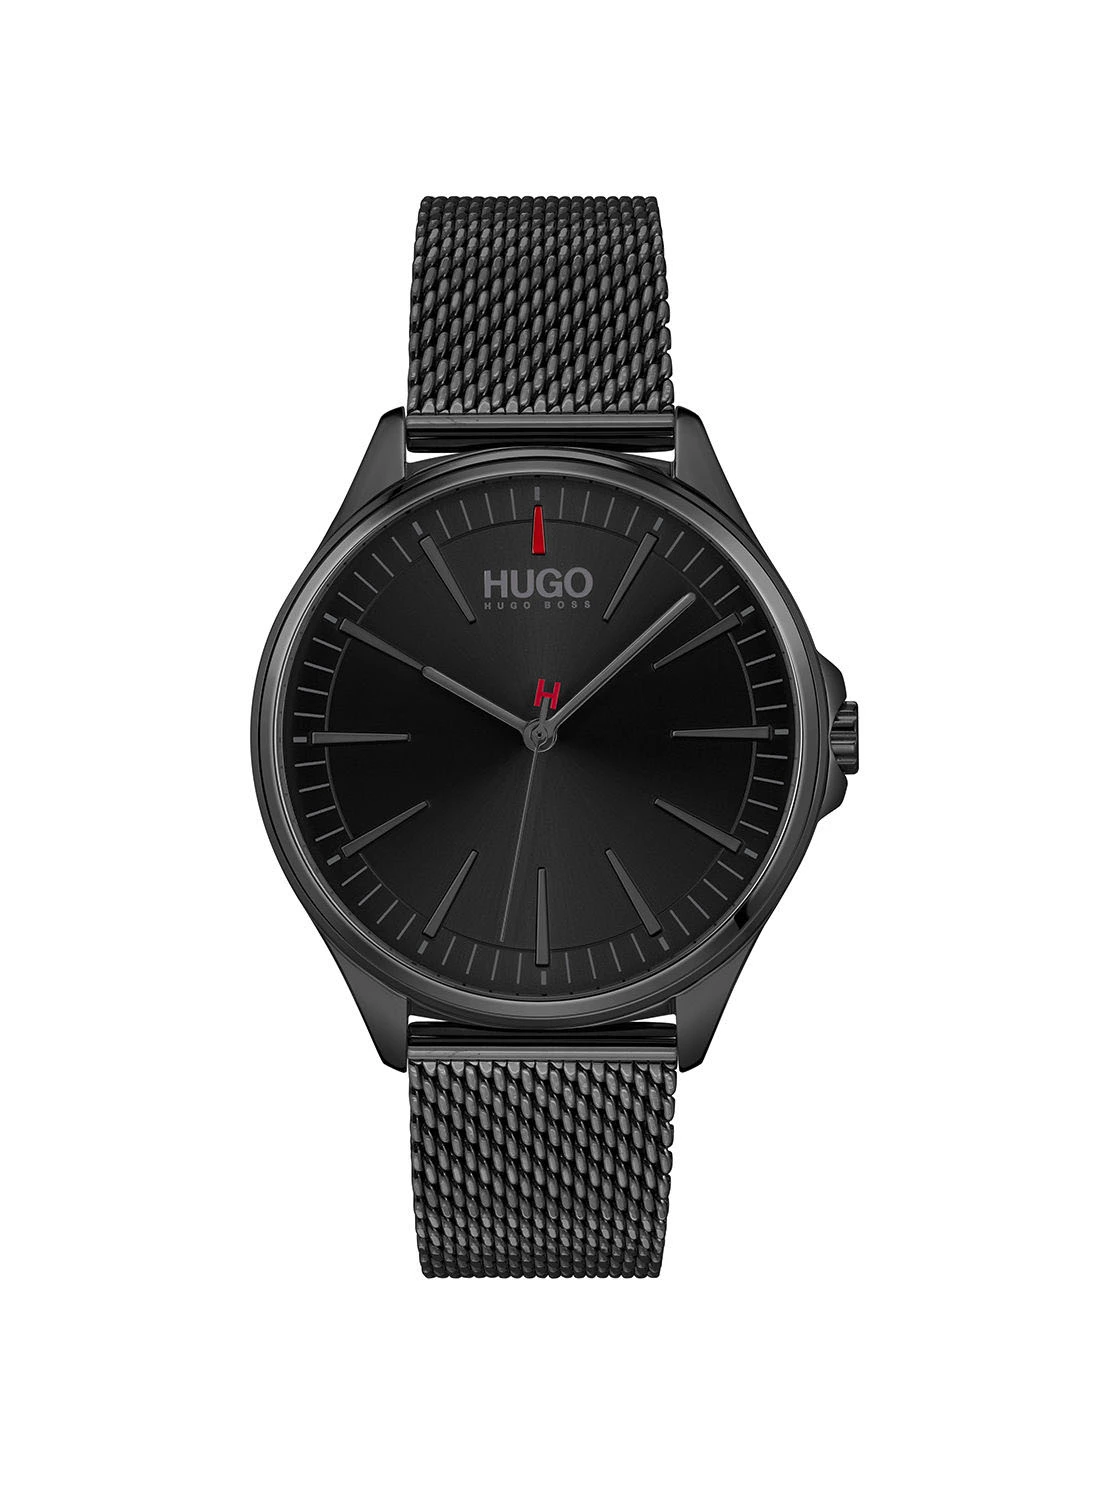 HUGO BOSS Men's #Smash  Black Dial Watch - 1530204